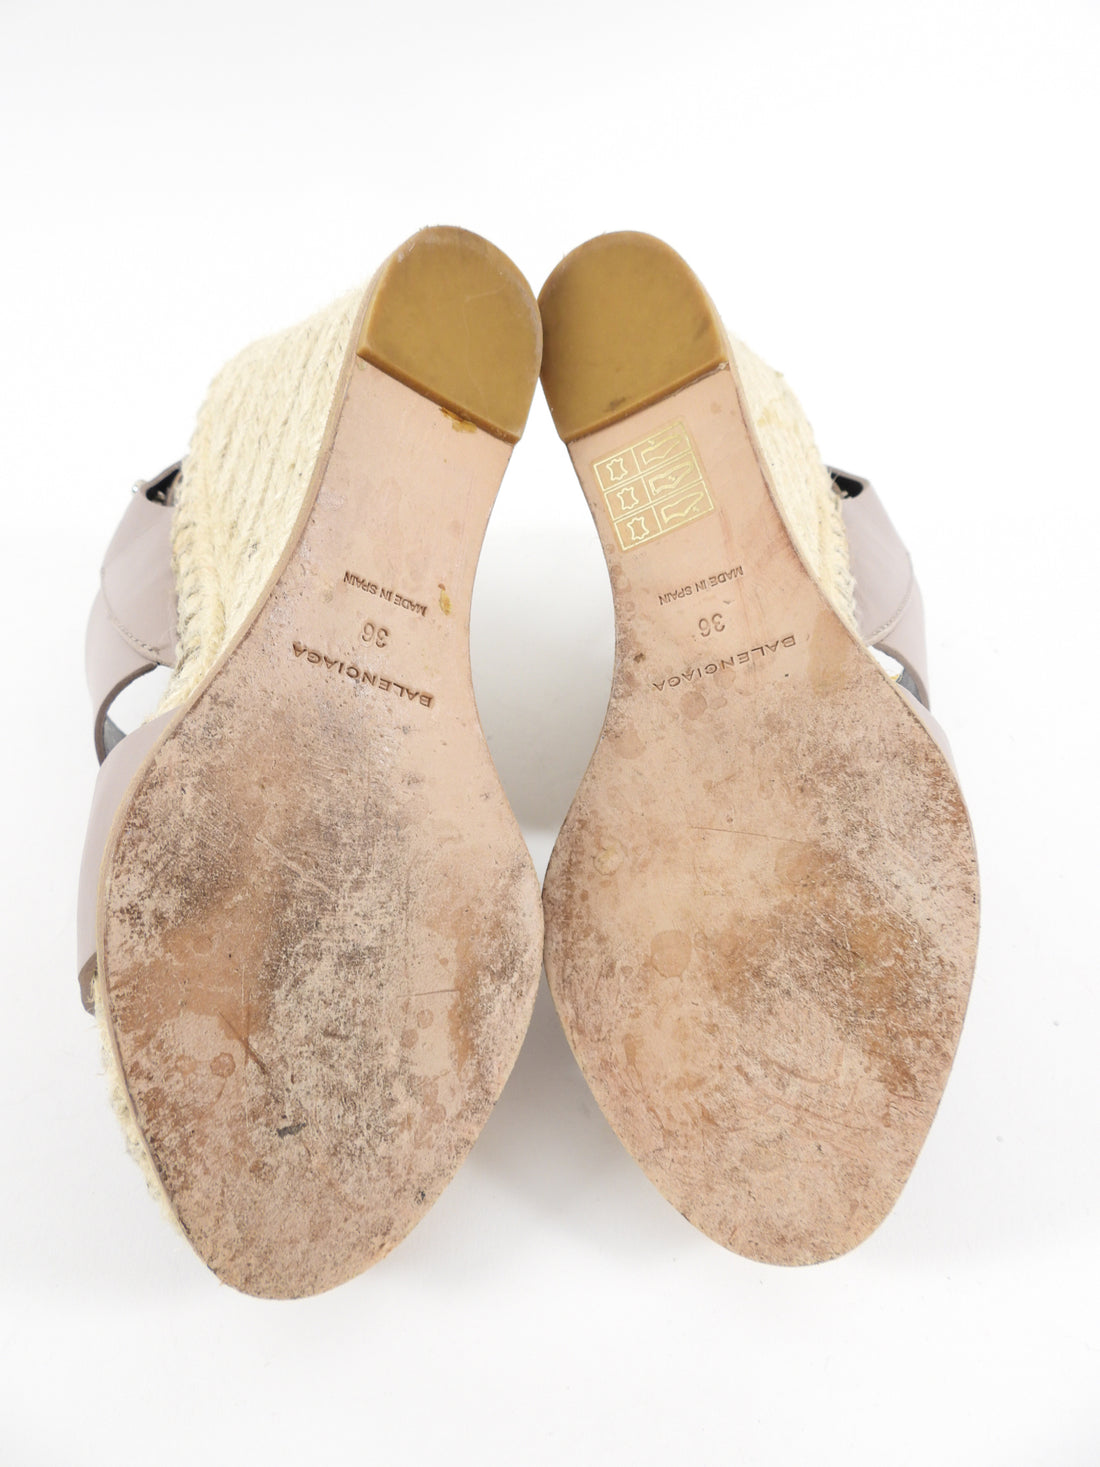 Balenciaga Taupe Leather Espadrille Wedge Sandals - 37